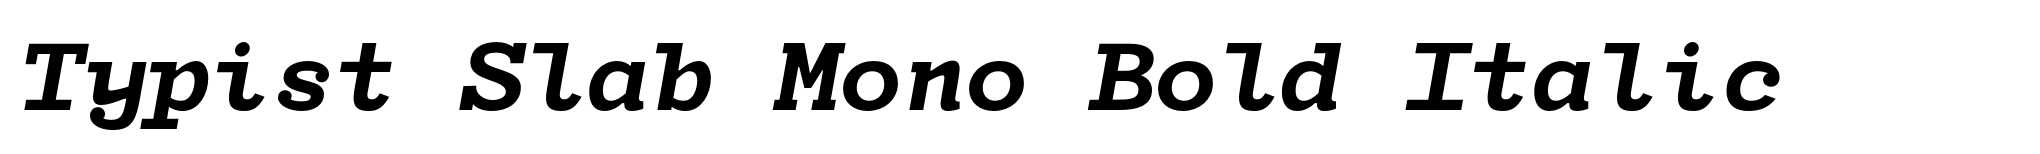 Typist Slab Mono Bold Italic image